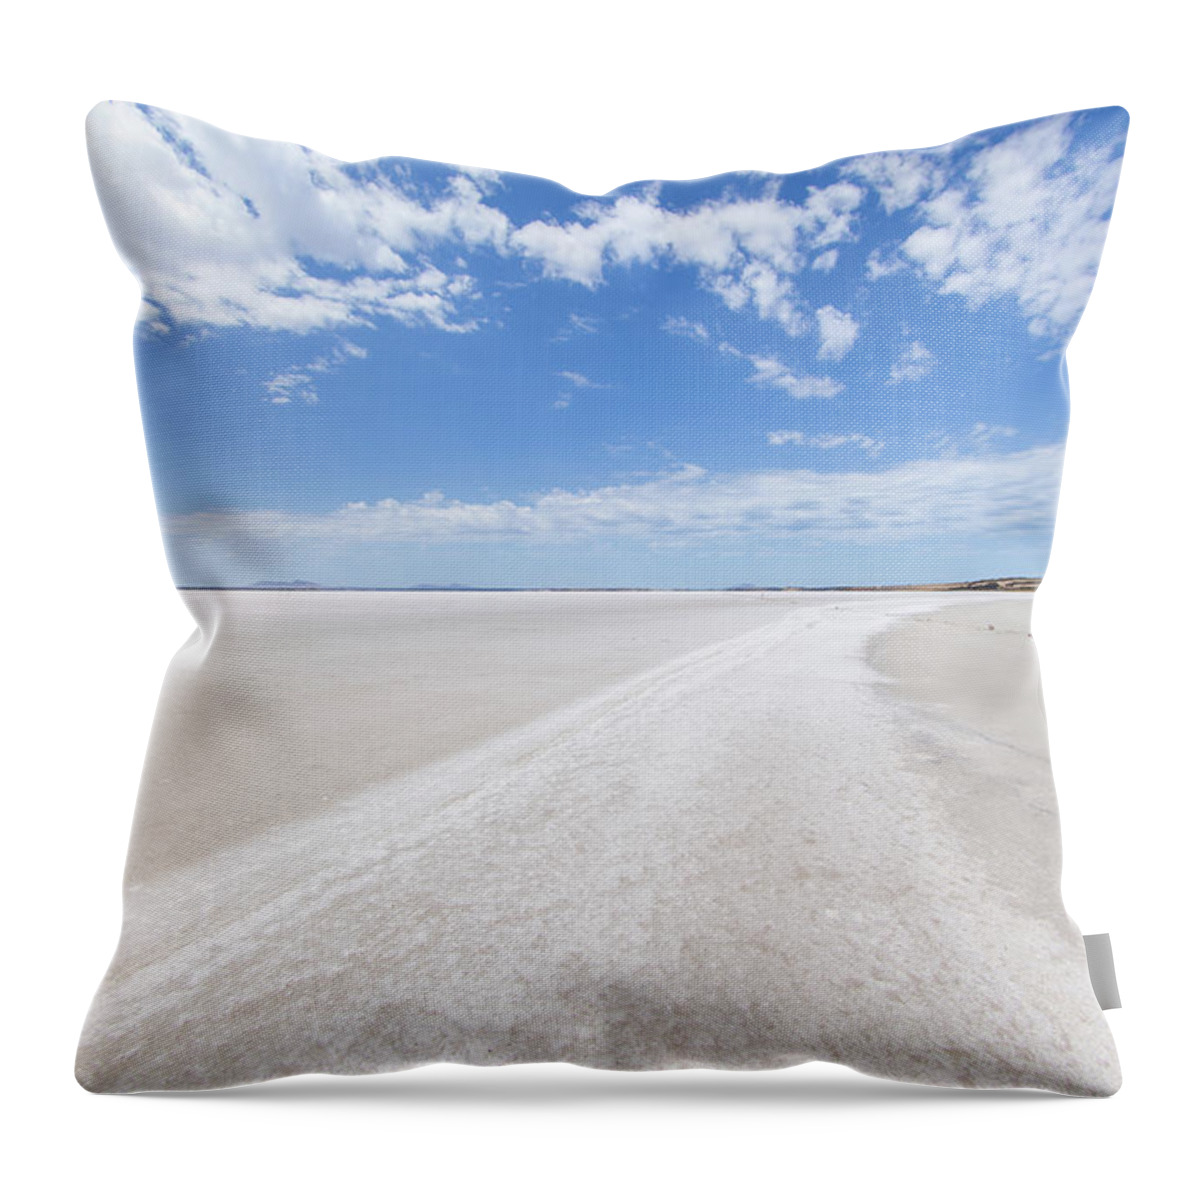 Tranquility Throw Pillow featuring the photograph Salt Lake At Cummins. South Australia by John White Photos